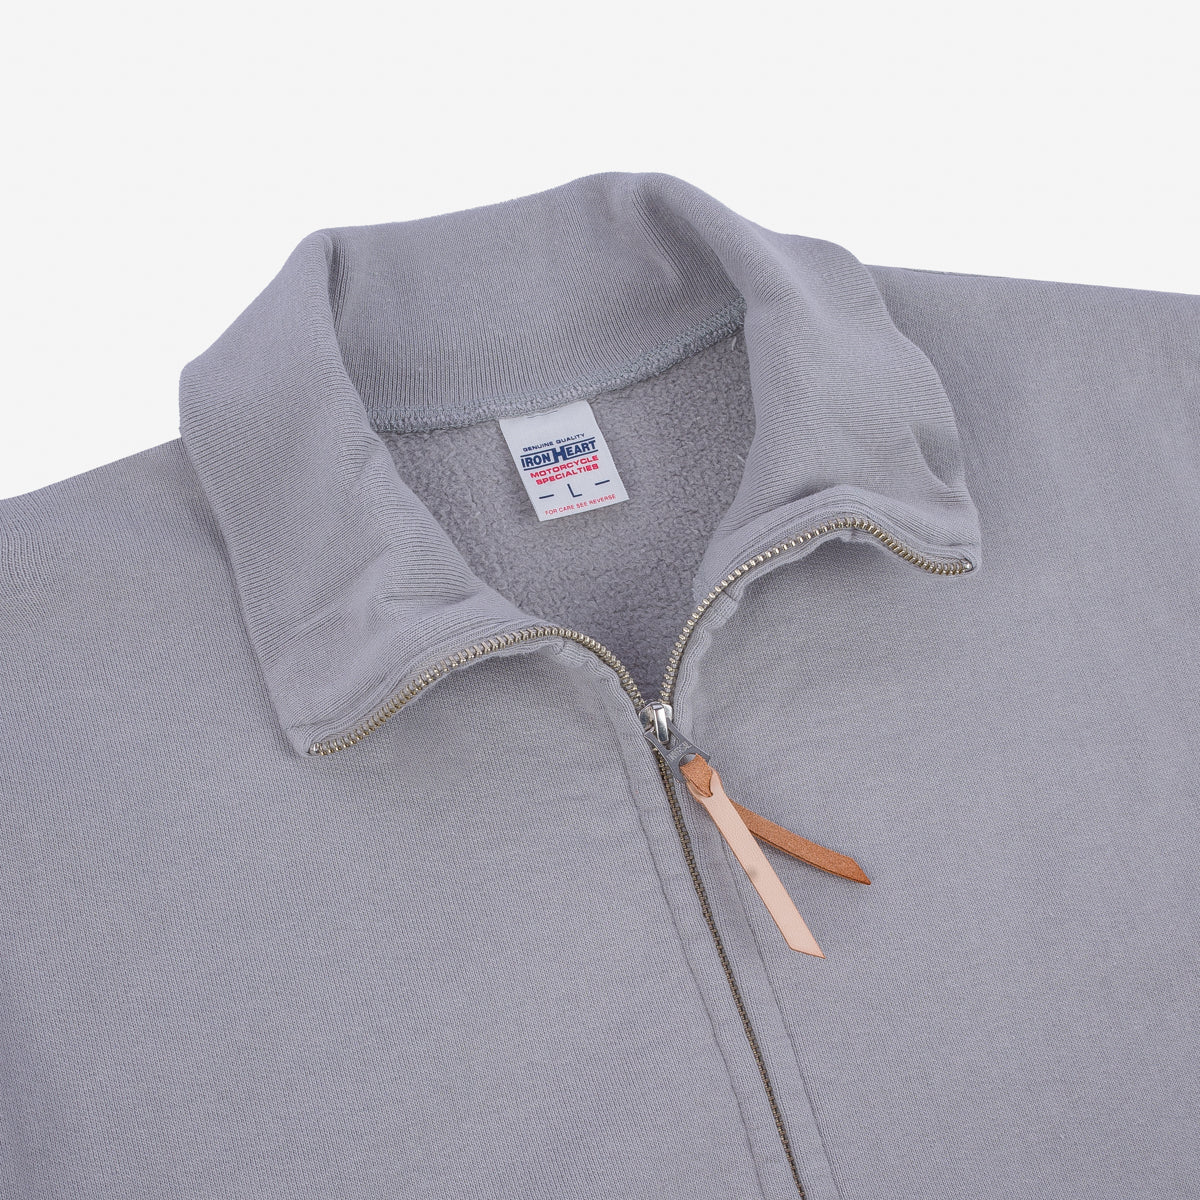 IHSW-11-GRY - 14oz Ultra Heavyweight Loopwheel Cotton Zip Up Sweater - Grey